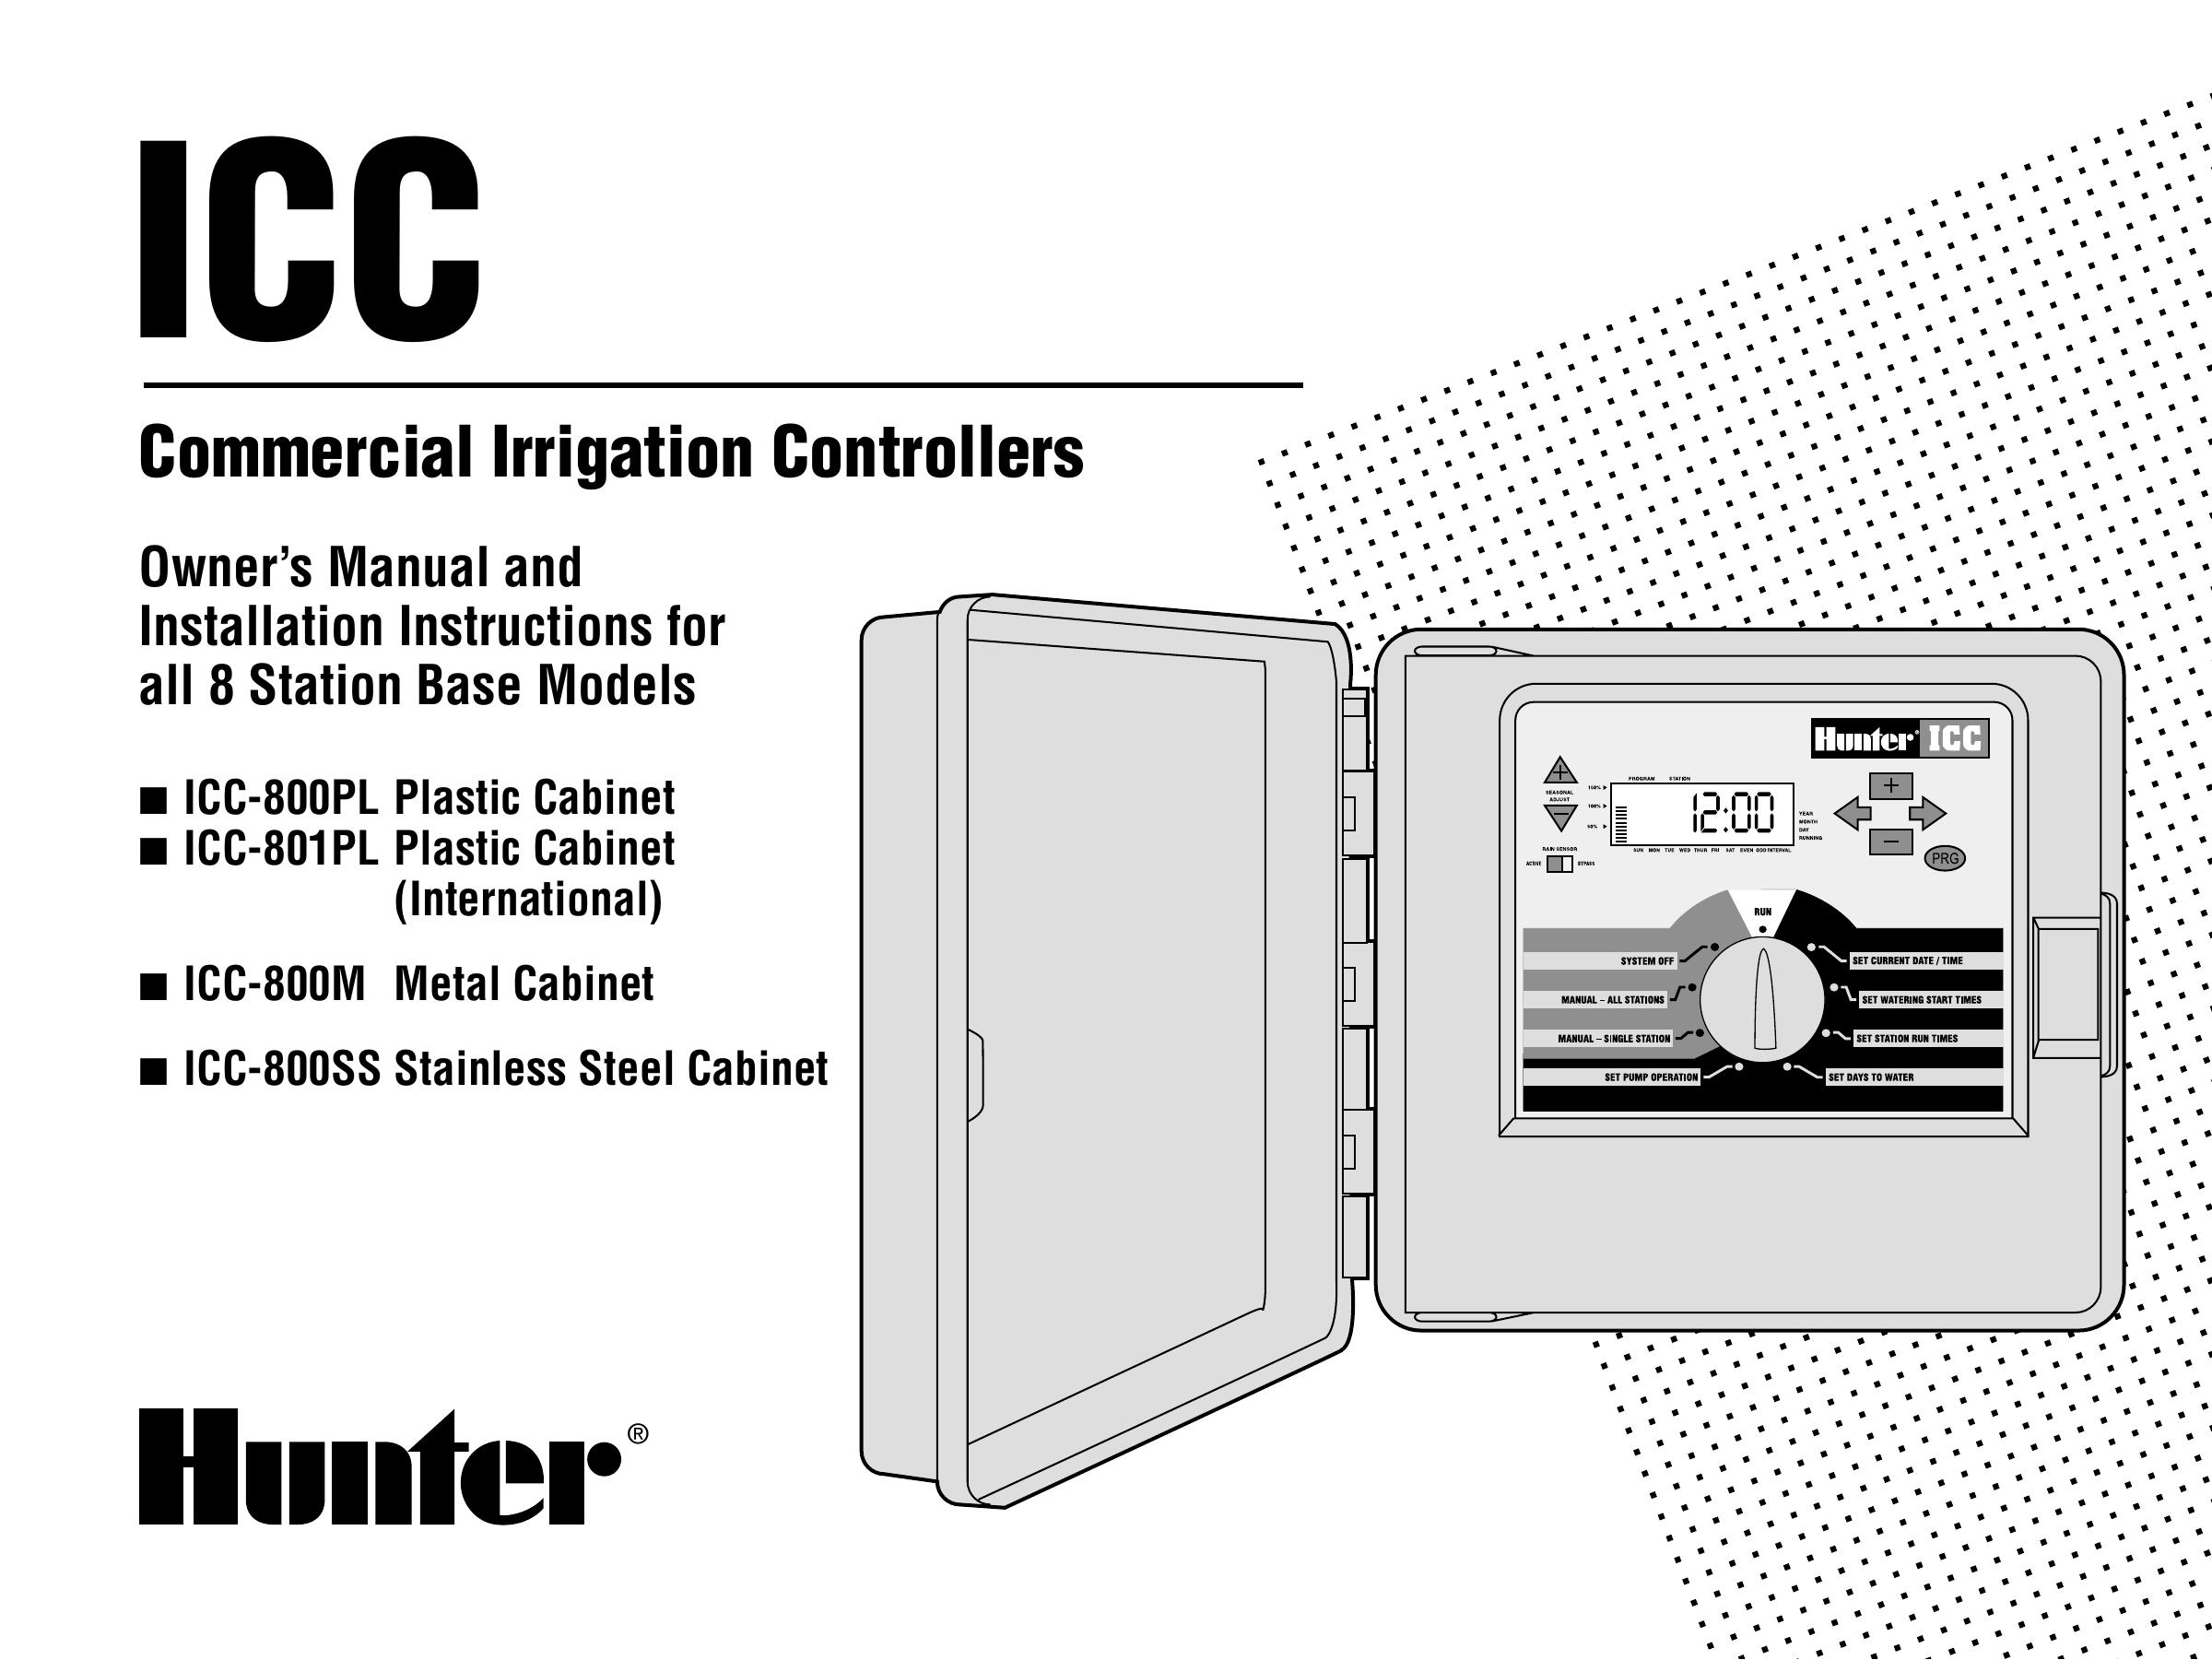 Hunter Fan ICC-801PL Irrigation System User Manual